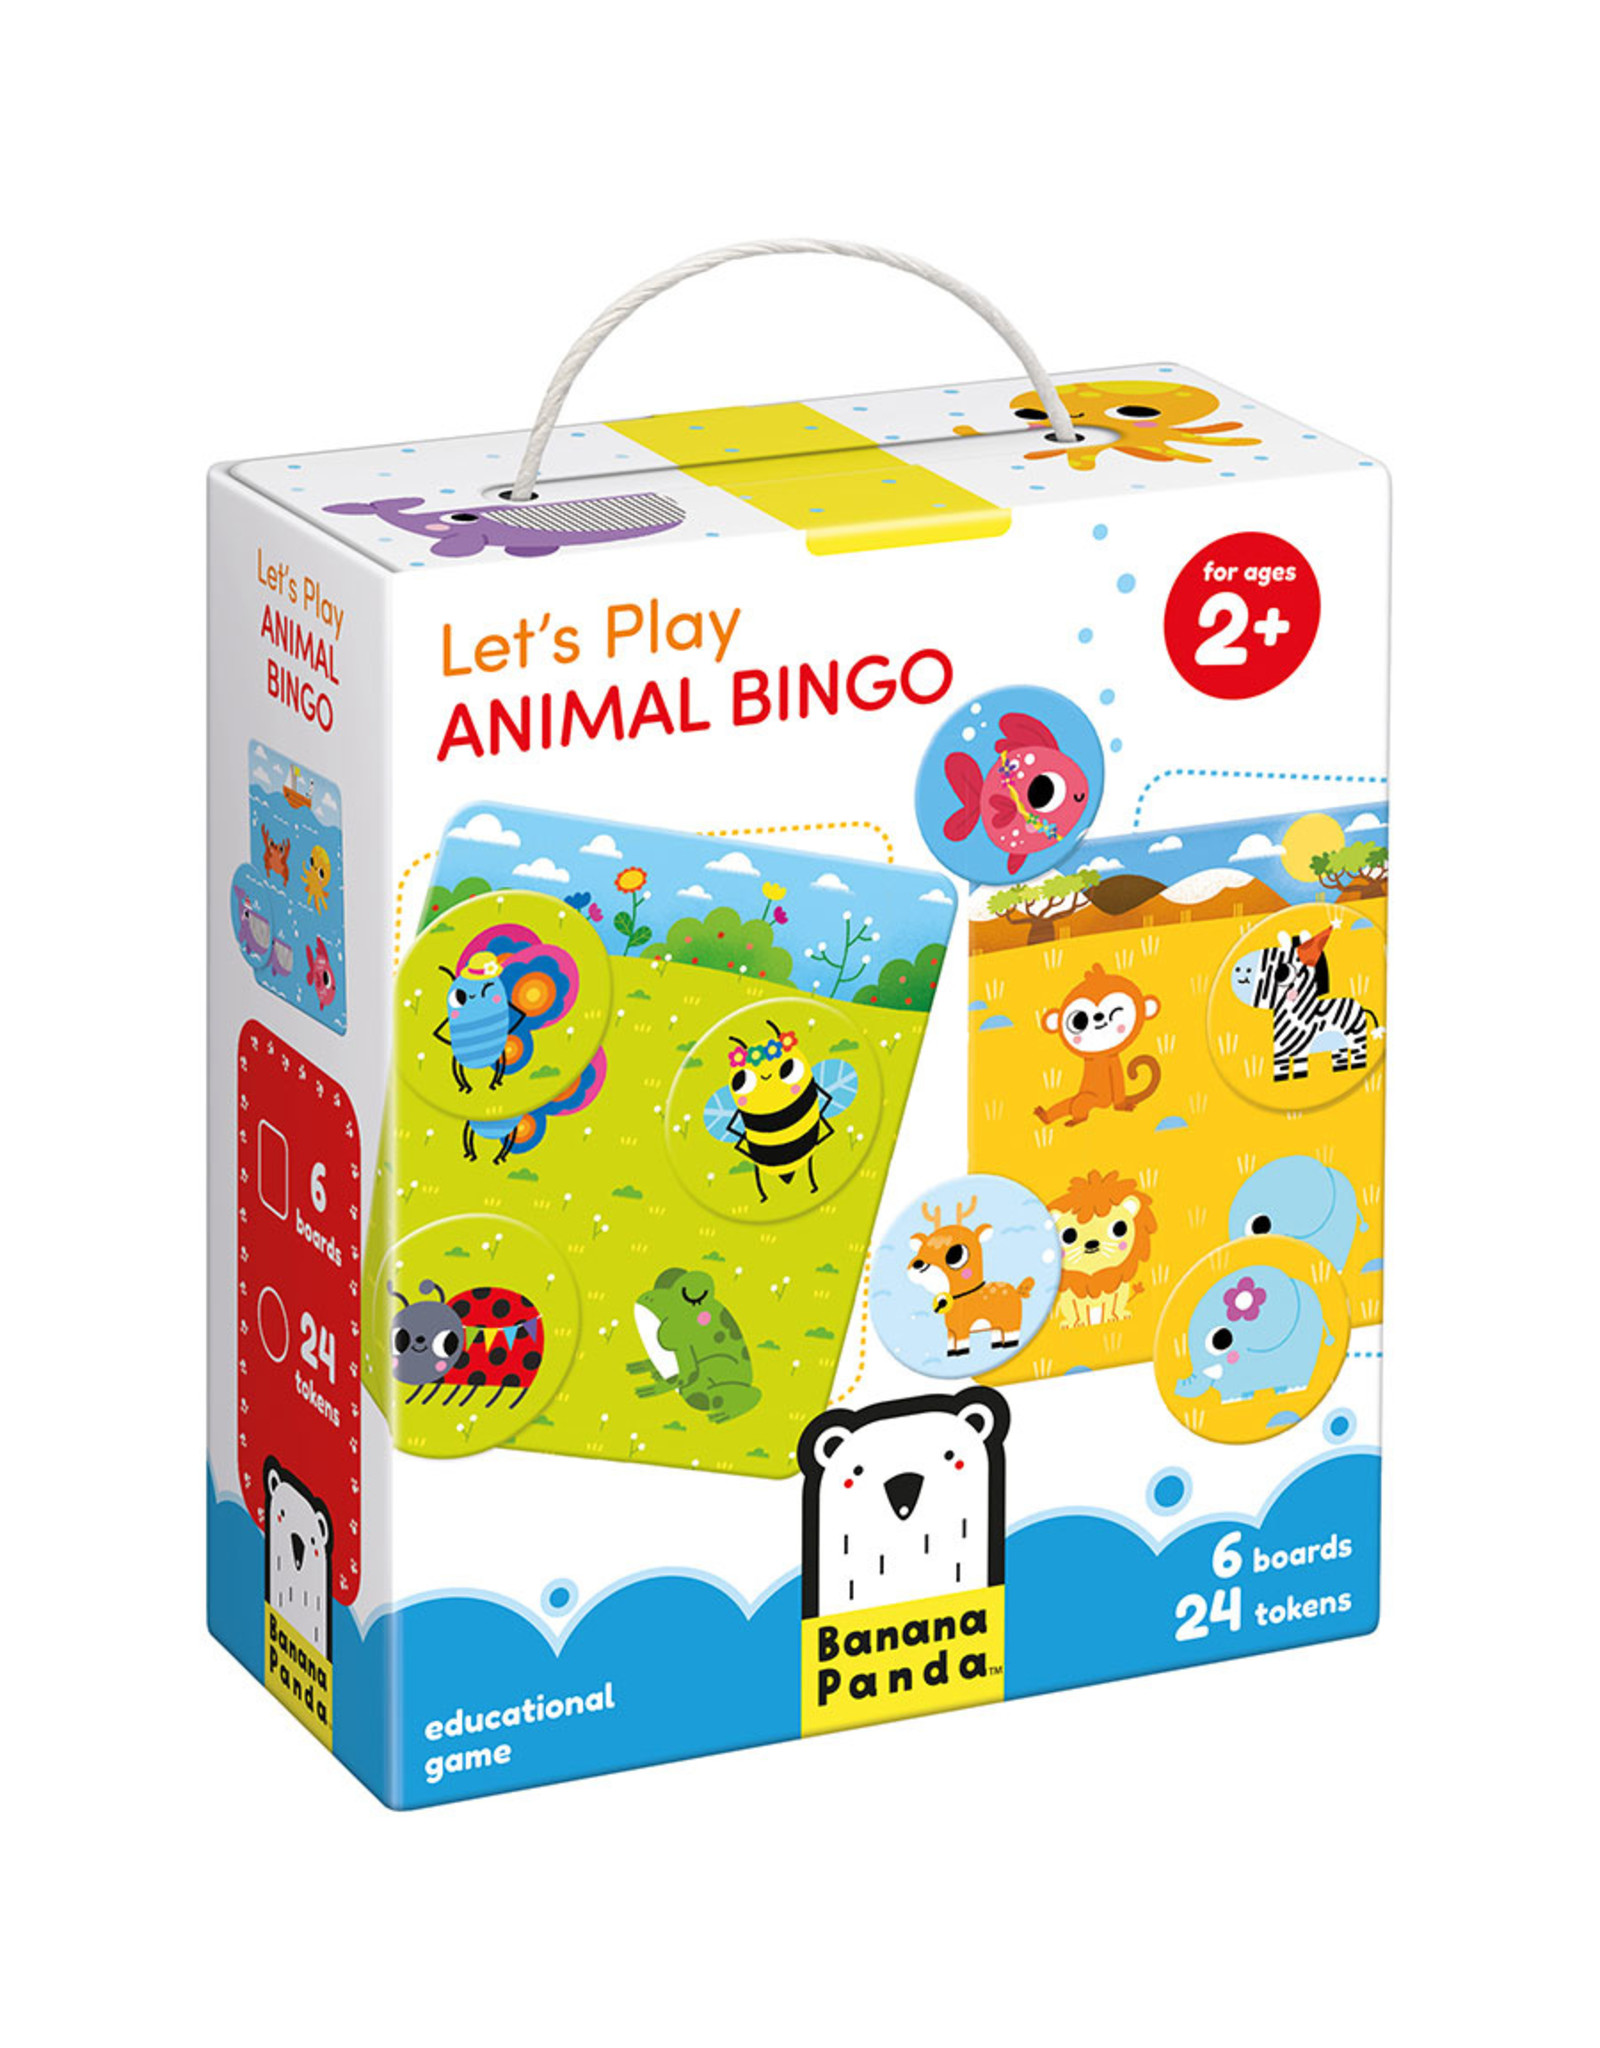 Let's Play Animal Bingo